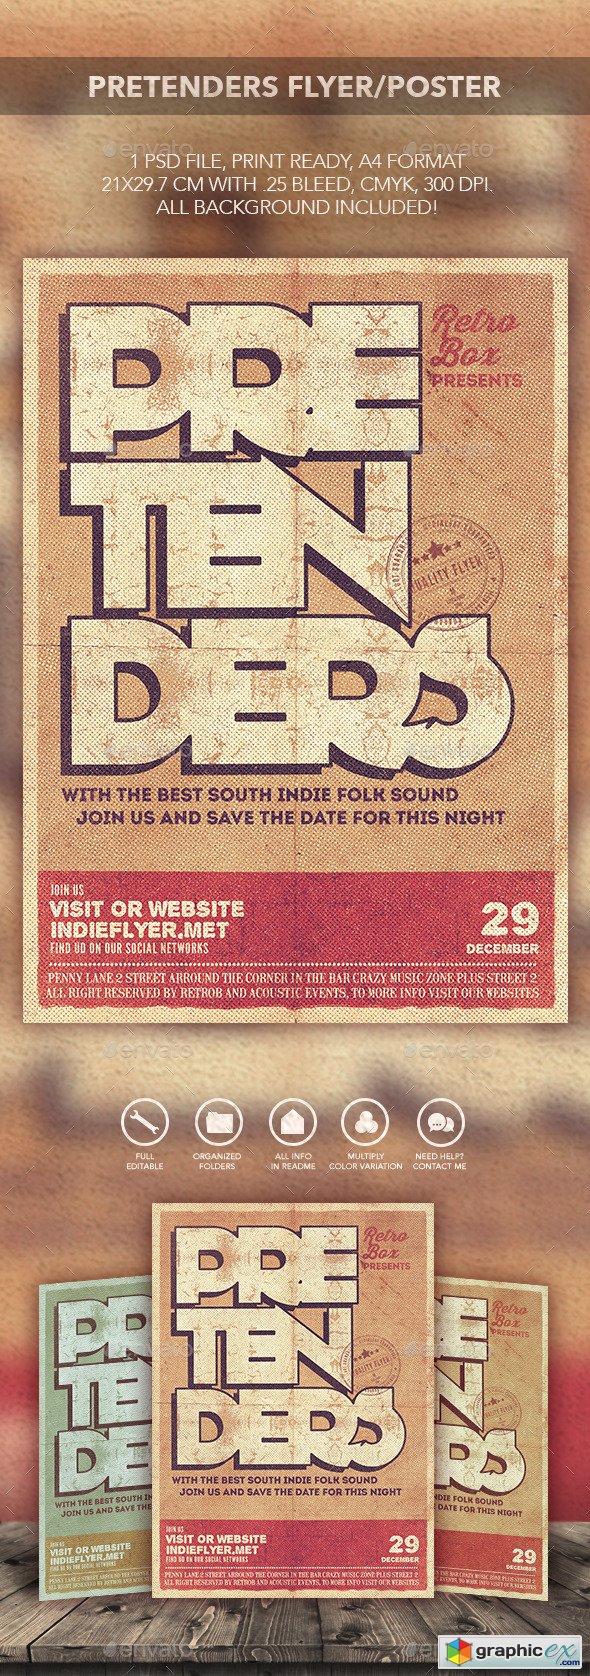 Pretenders Flyer/Poster